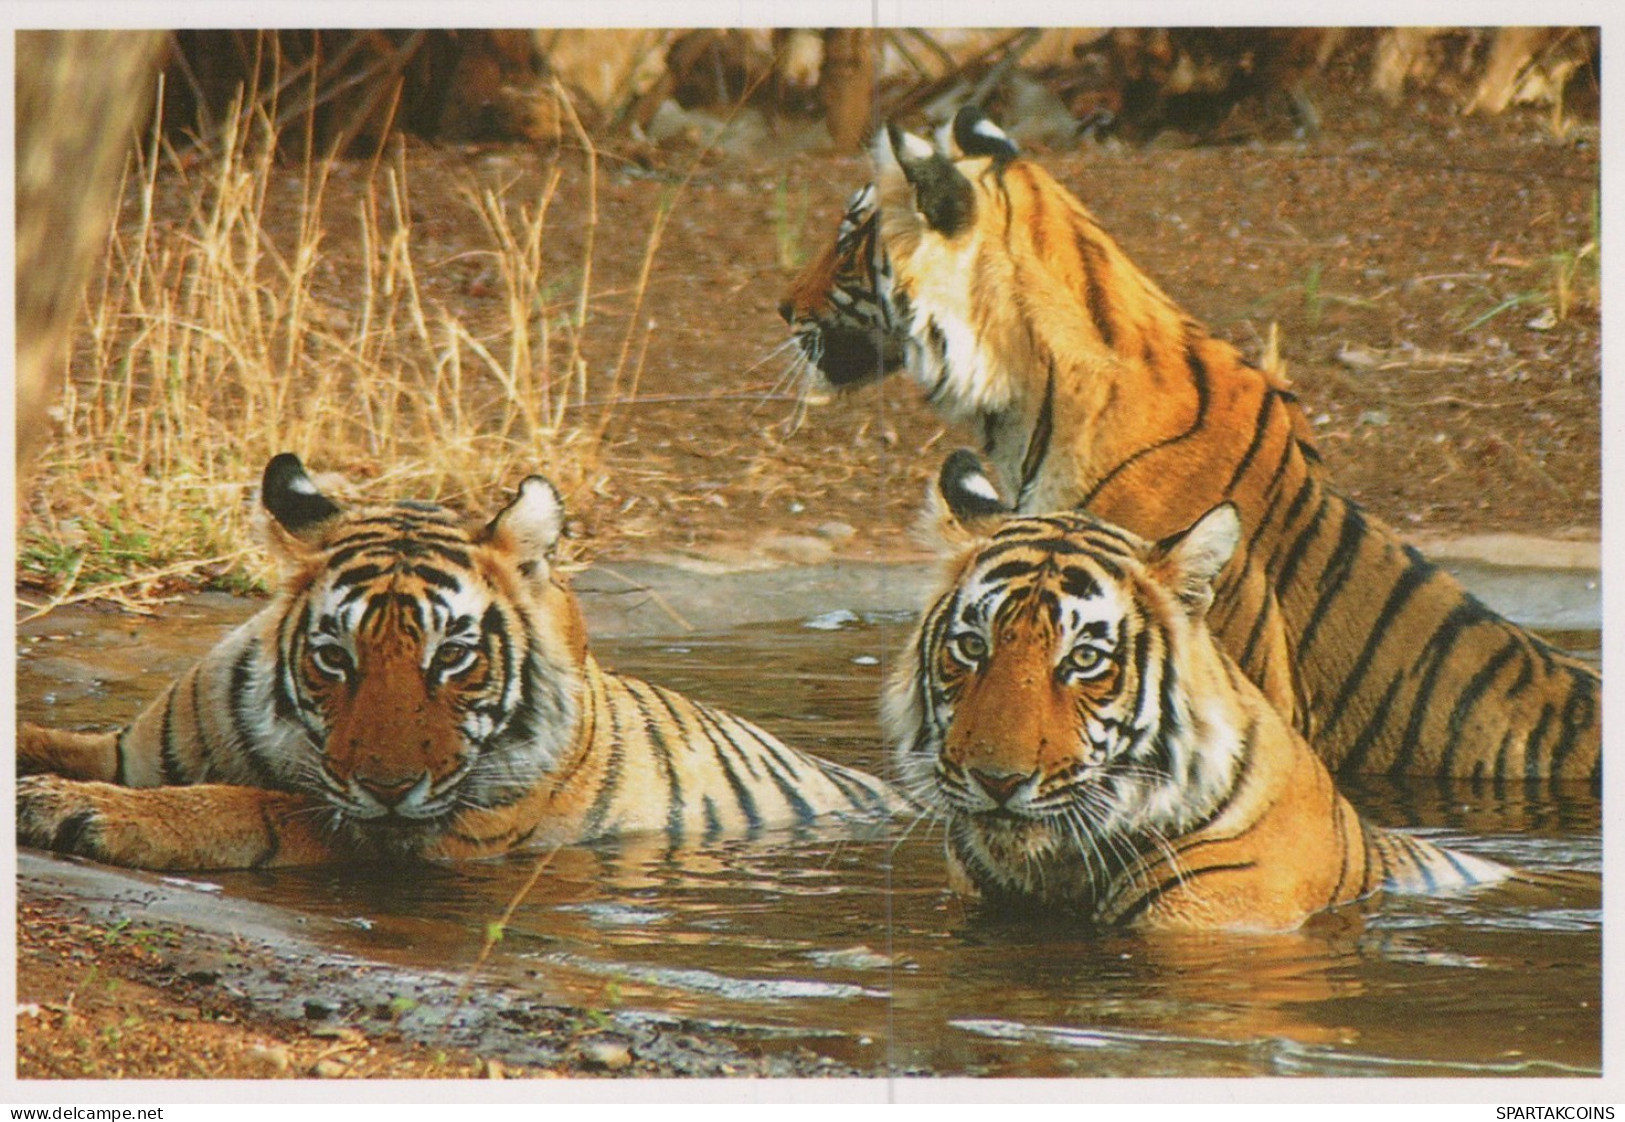 TIGER BIG CAT Animals Vintage Postcard CPSM Unposted #PAM031.A - Tigers